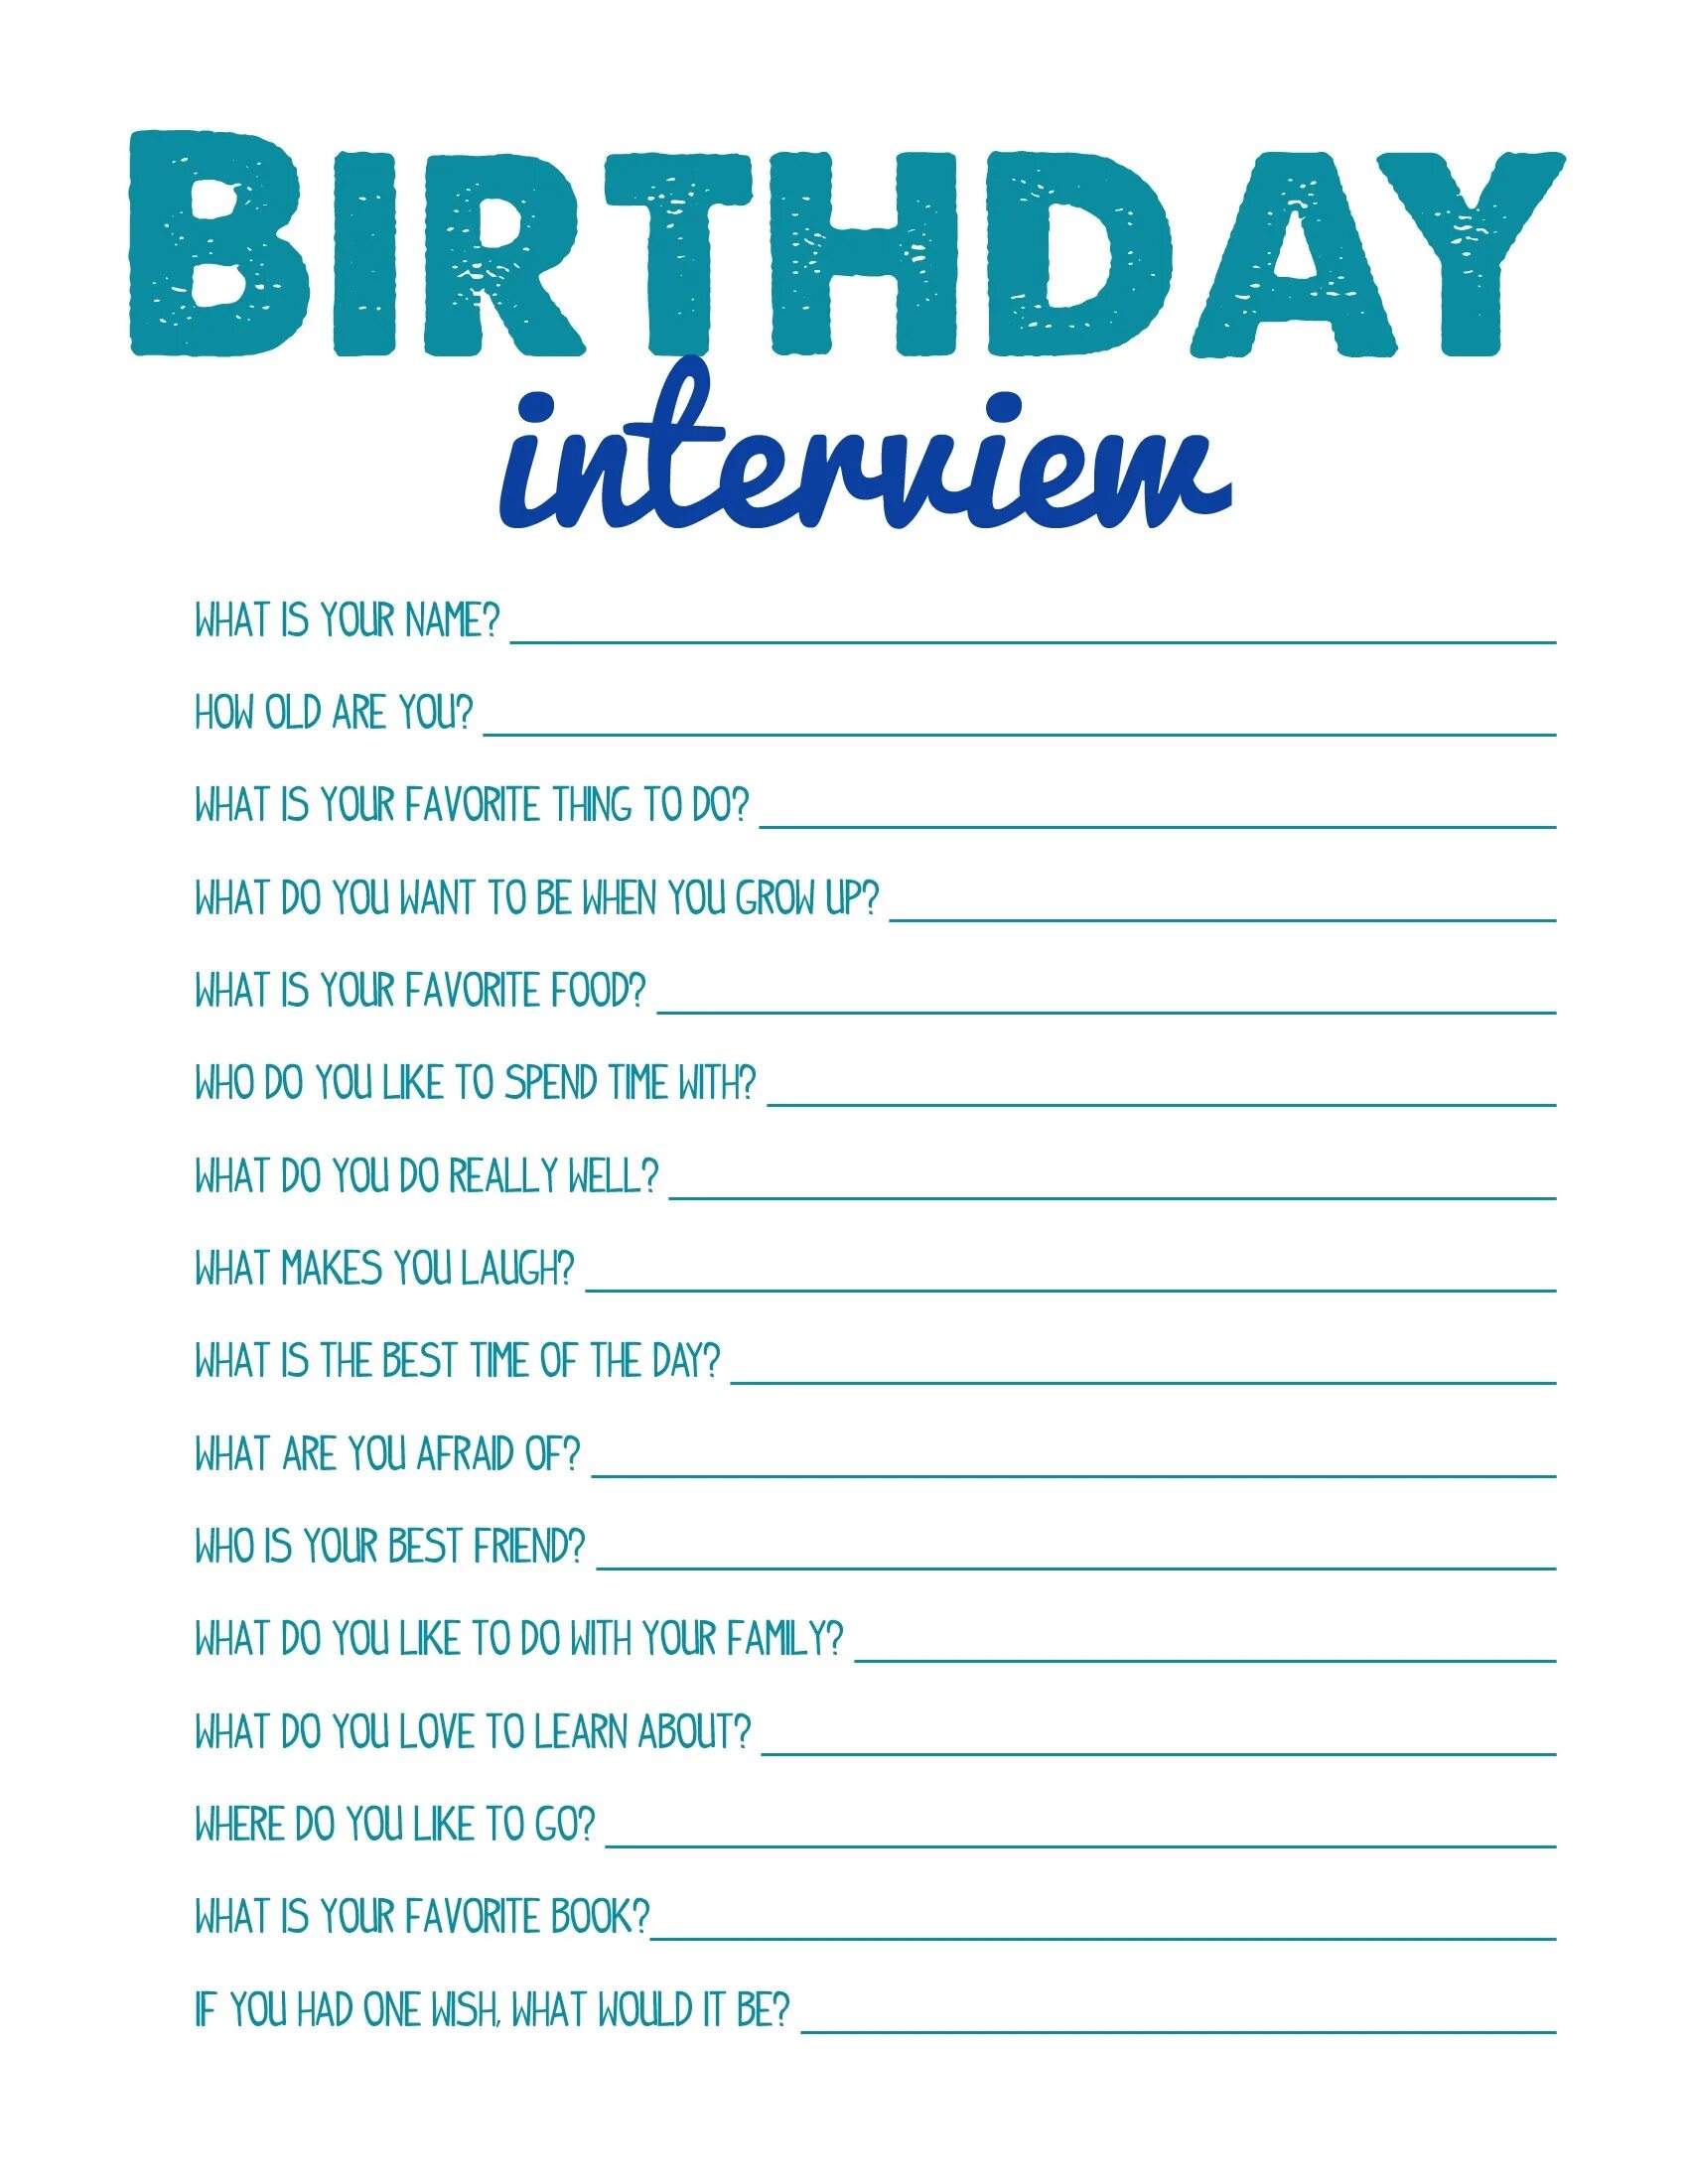 Happy Birthday activity for Kids. Birthday activities for Kids. Birthday questions for Kids. Birthday activities